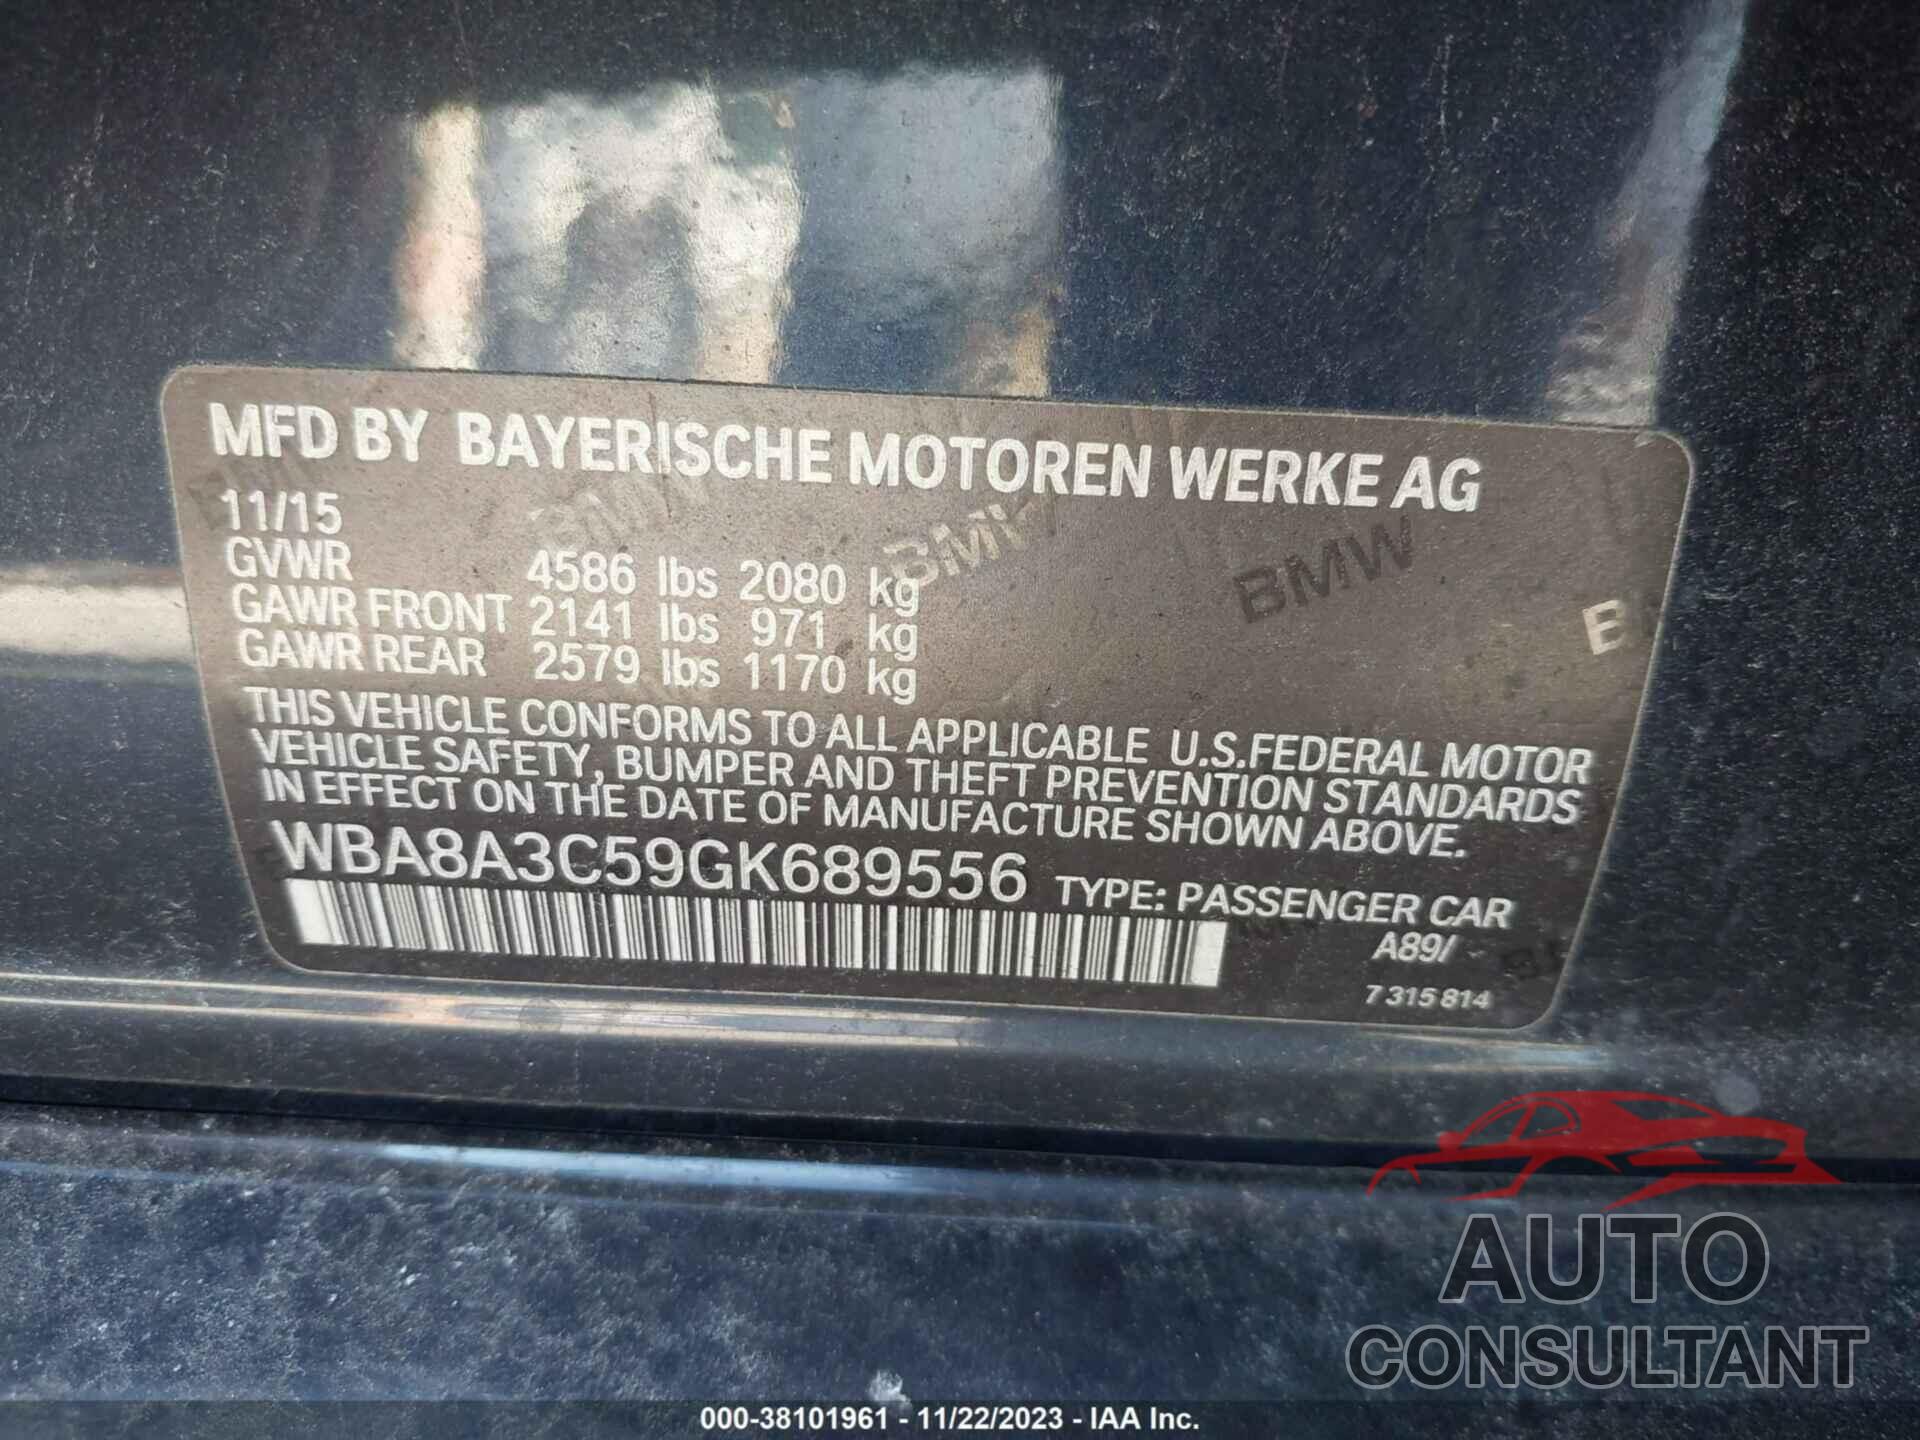 BMW 320I 2016 - WBA8A3C59GK689556